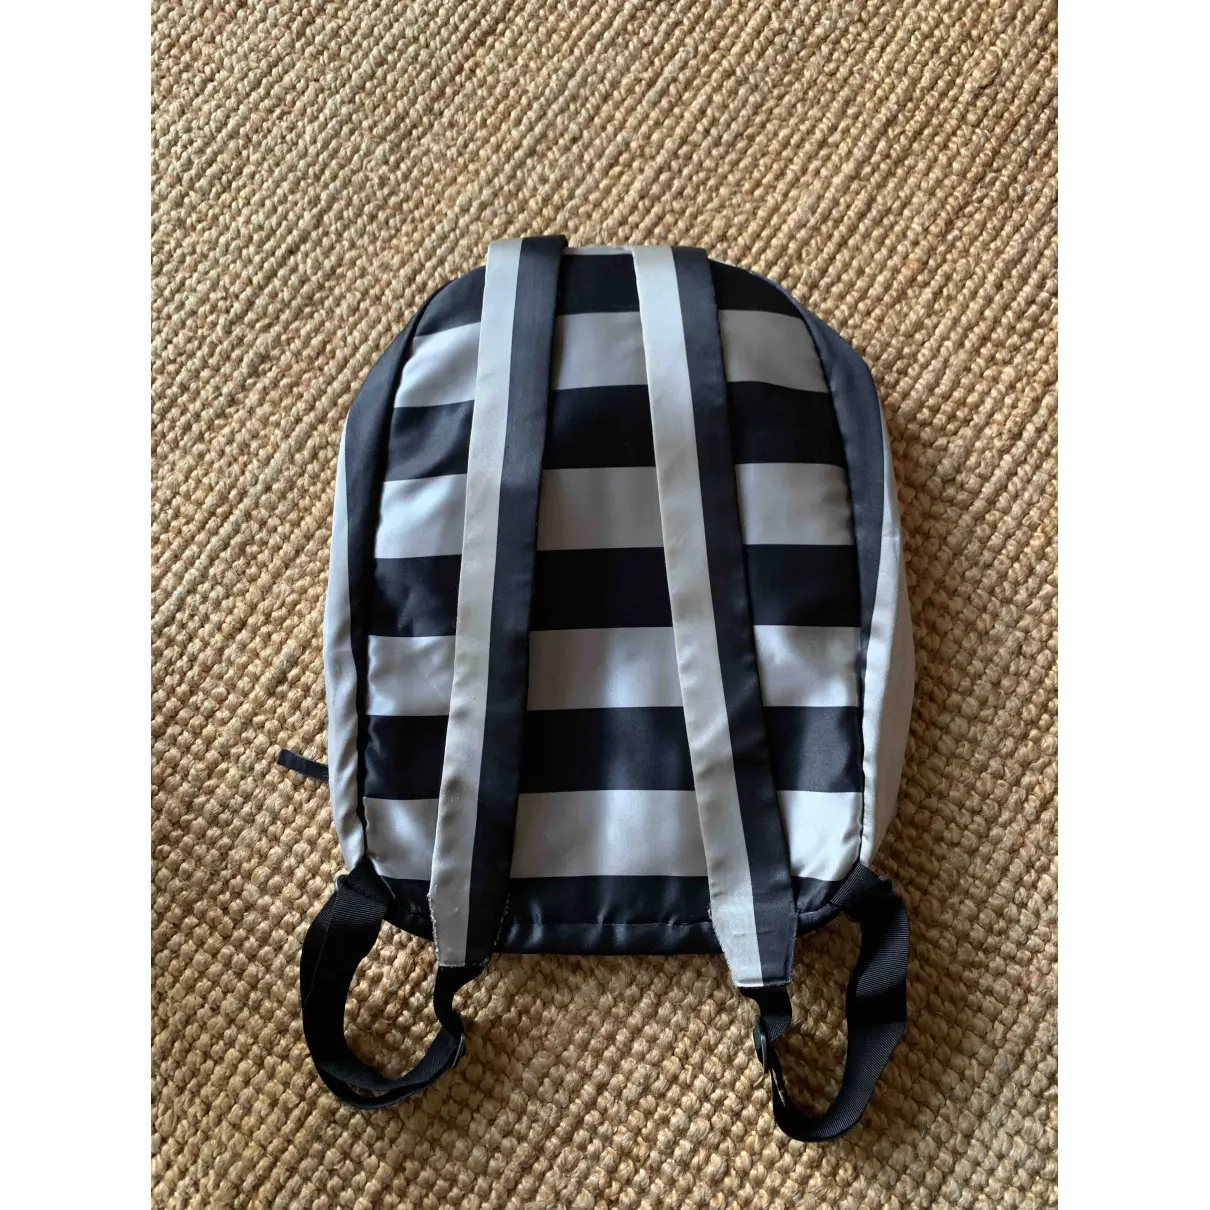 Buy Eastpak Silk backpack online